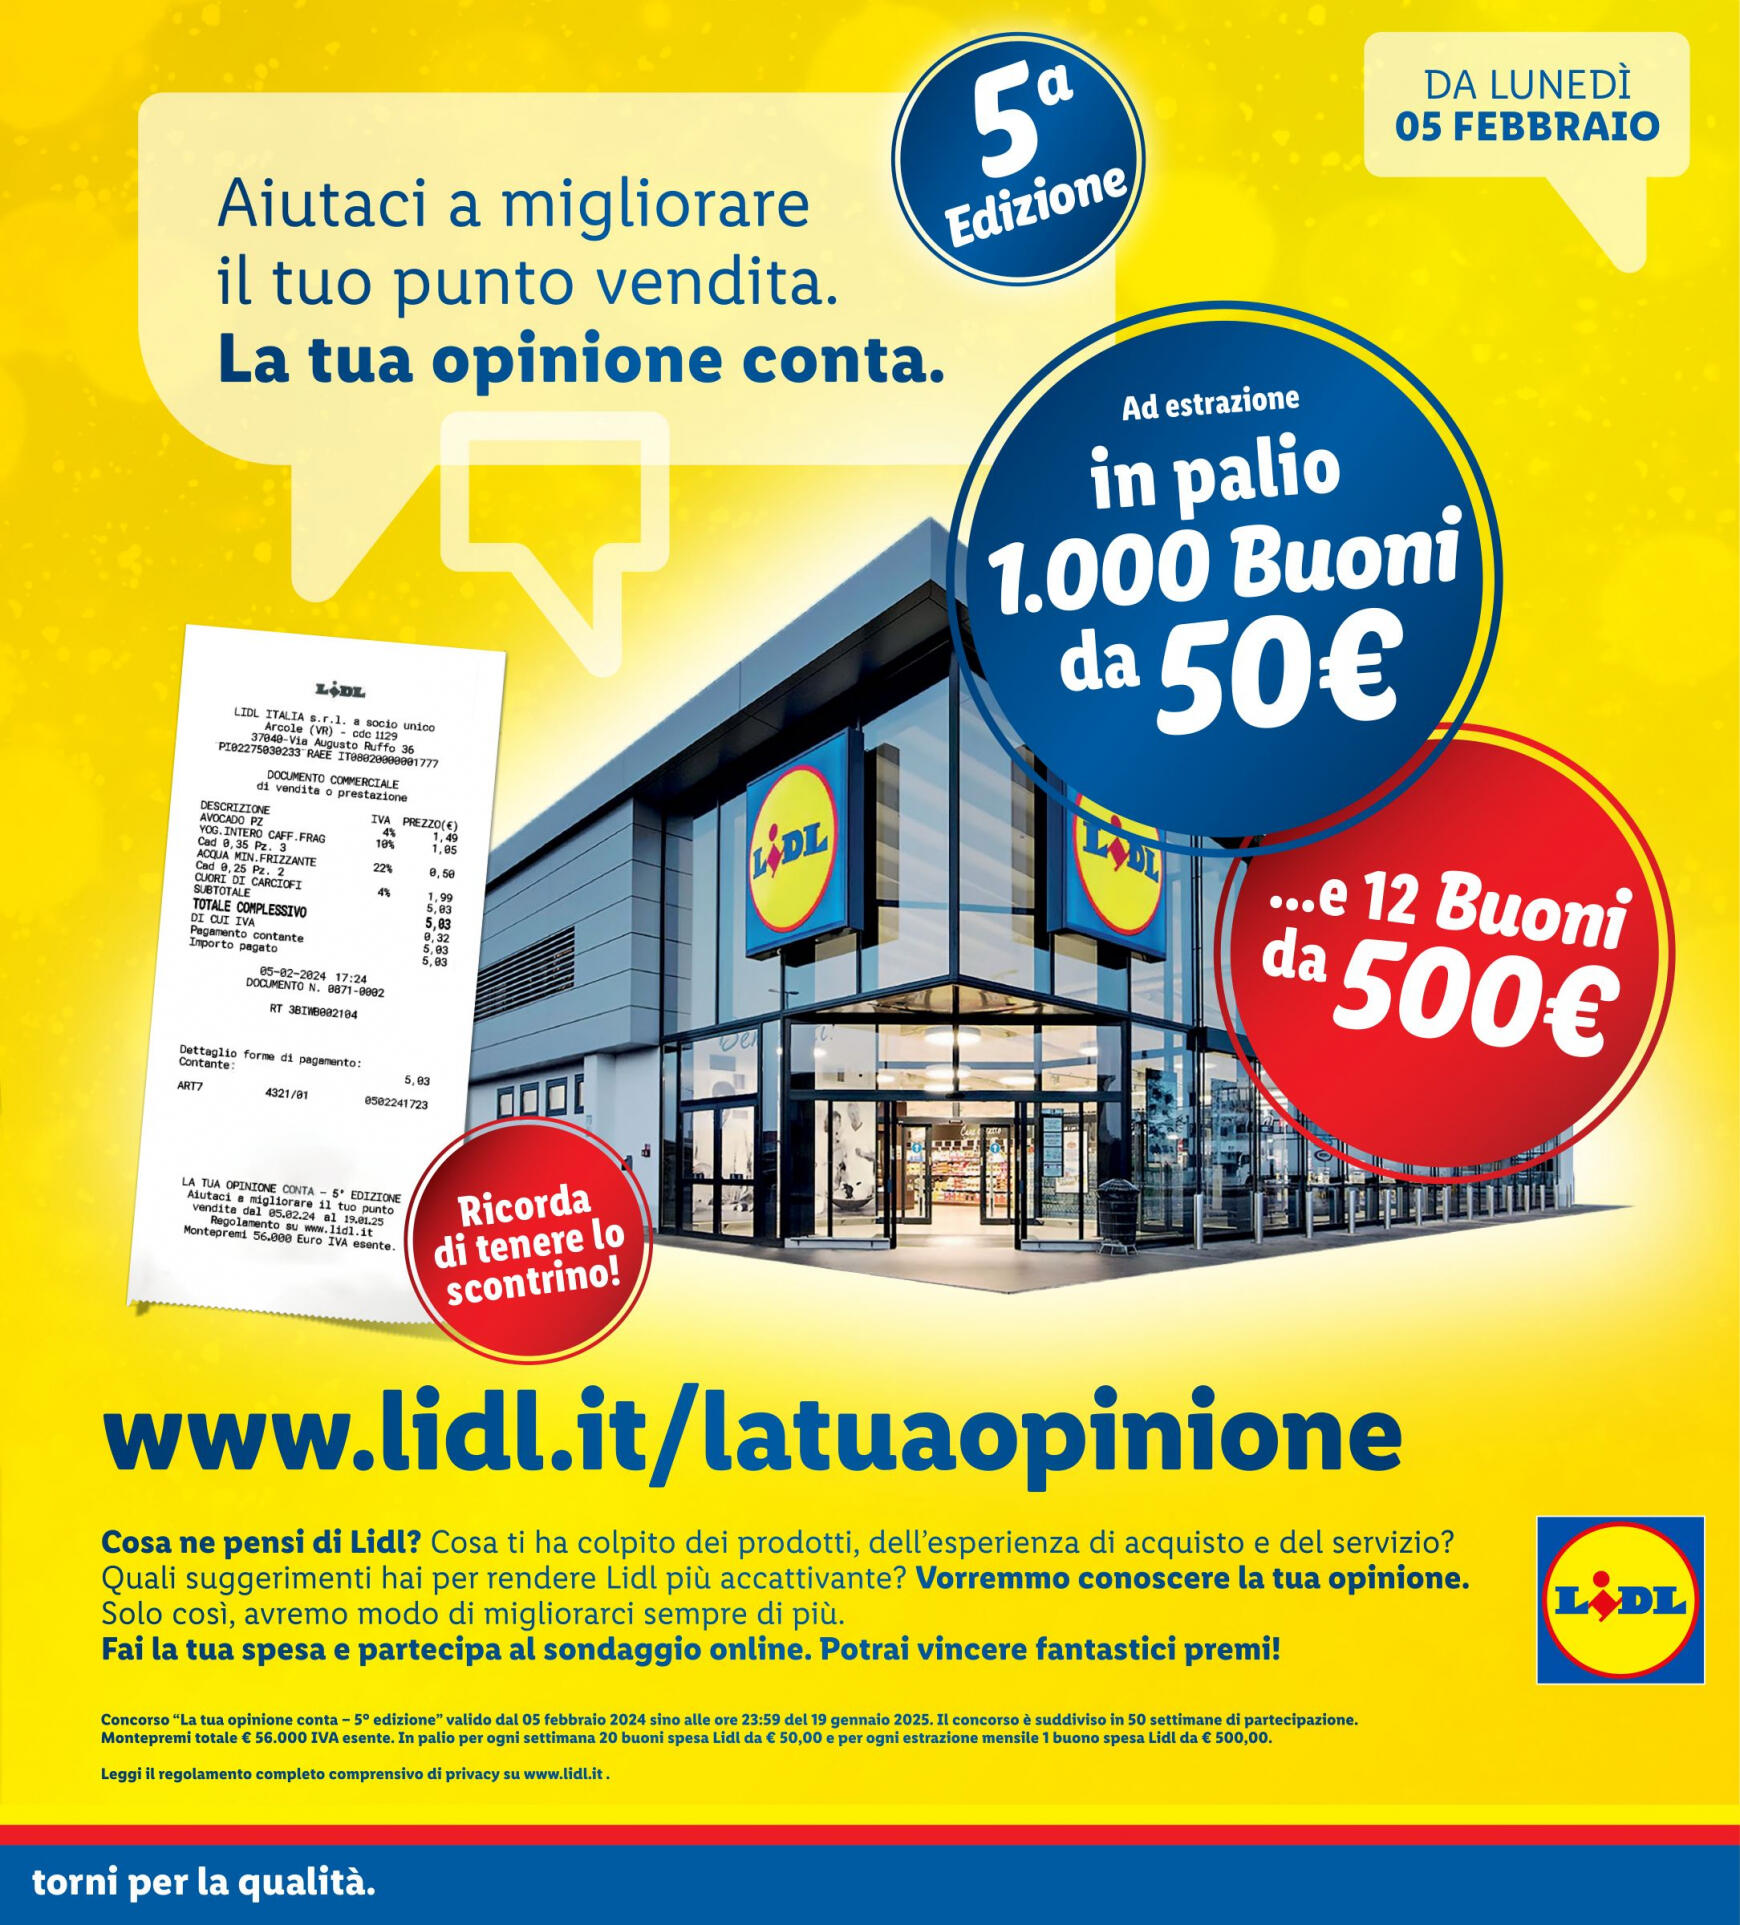 lidl - Nuovo volantino Lidl 13.05. - 19.05. - page: 27